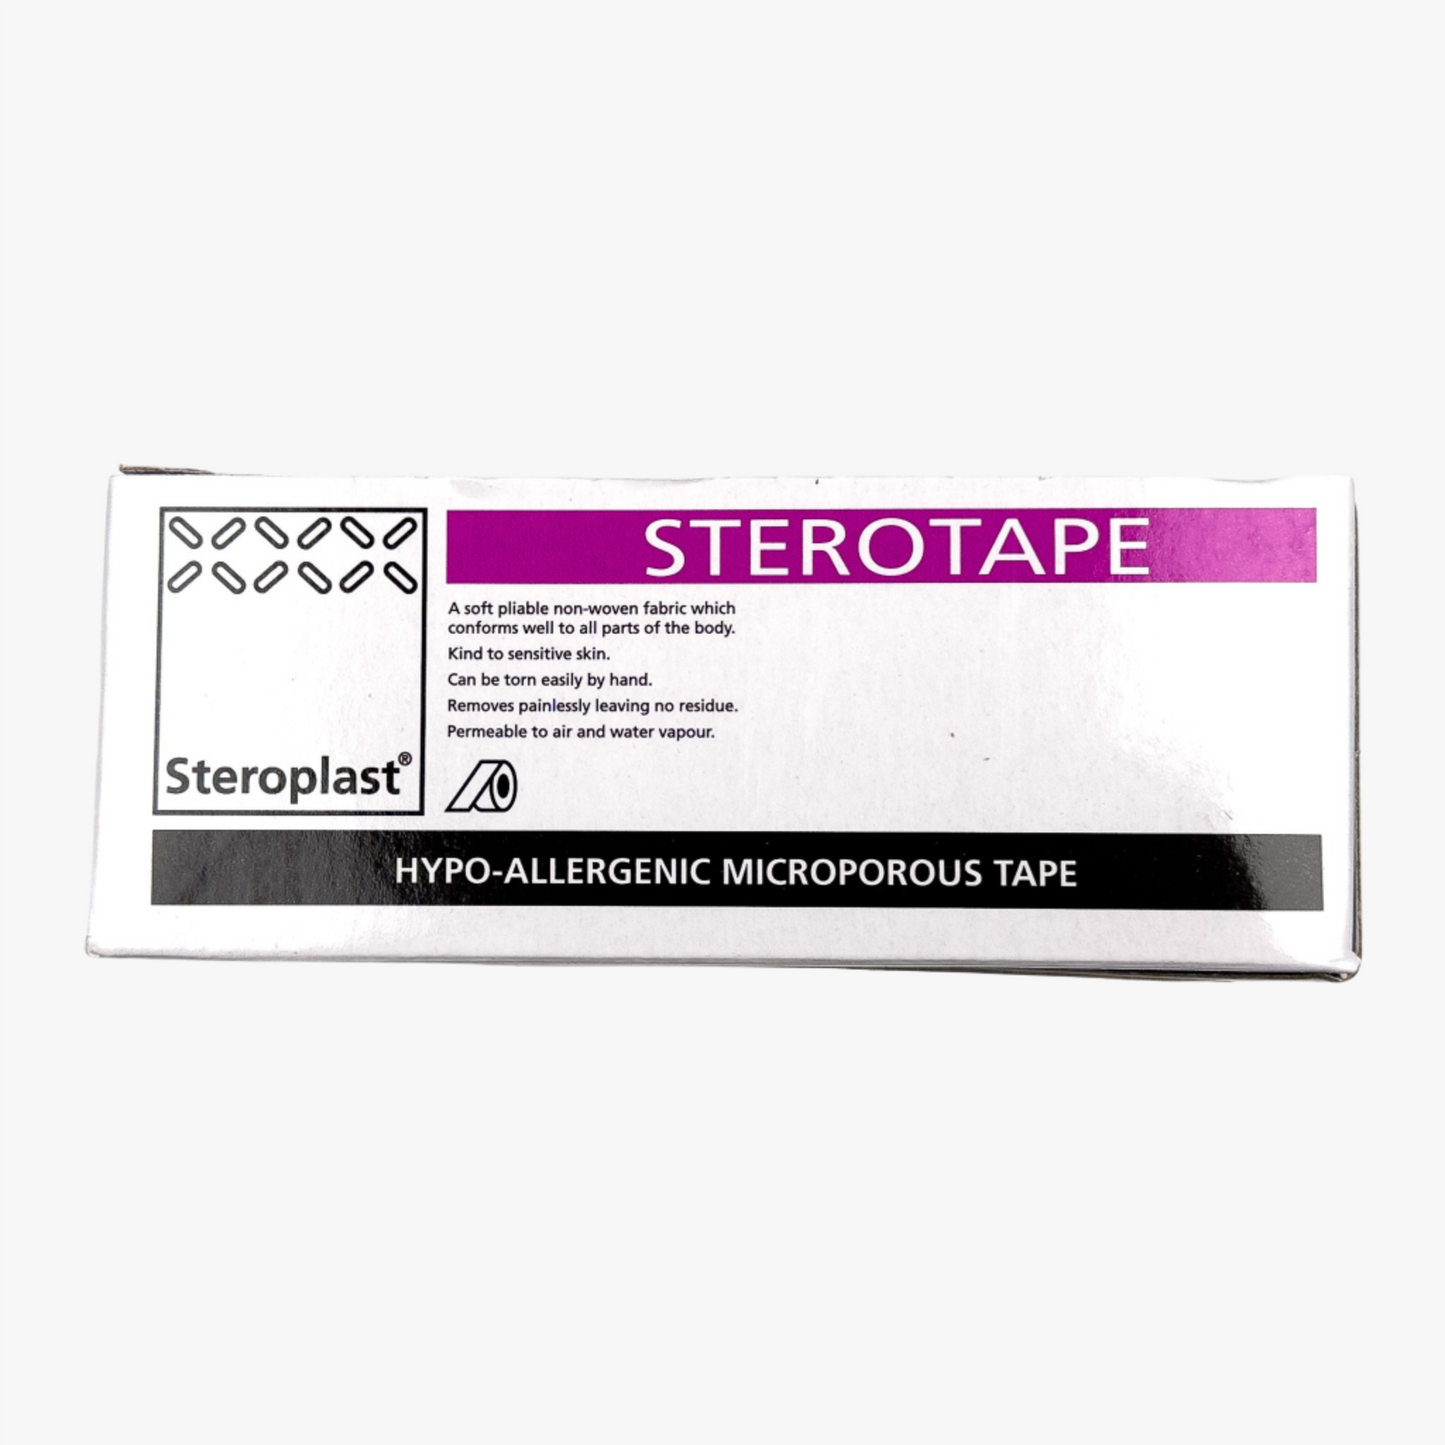 Stereotape Kirurgtejp 2,5 cm x 10 m 12 st